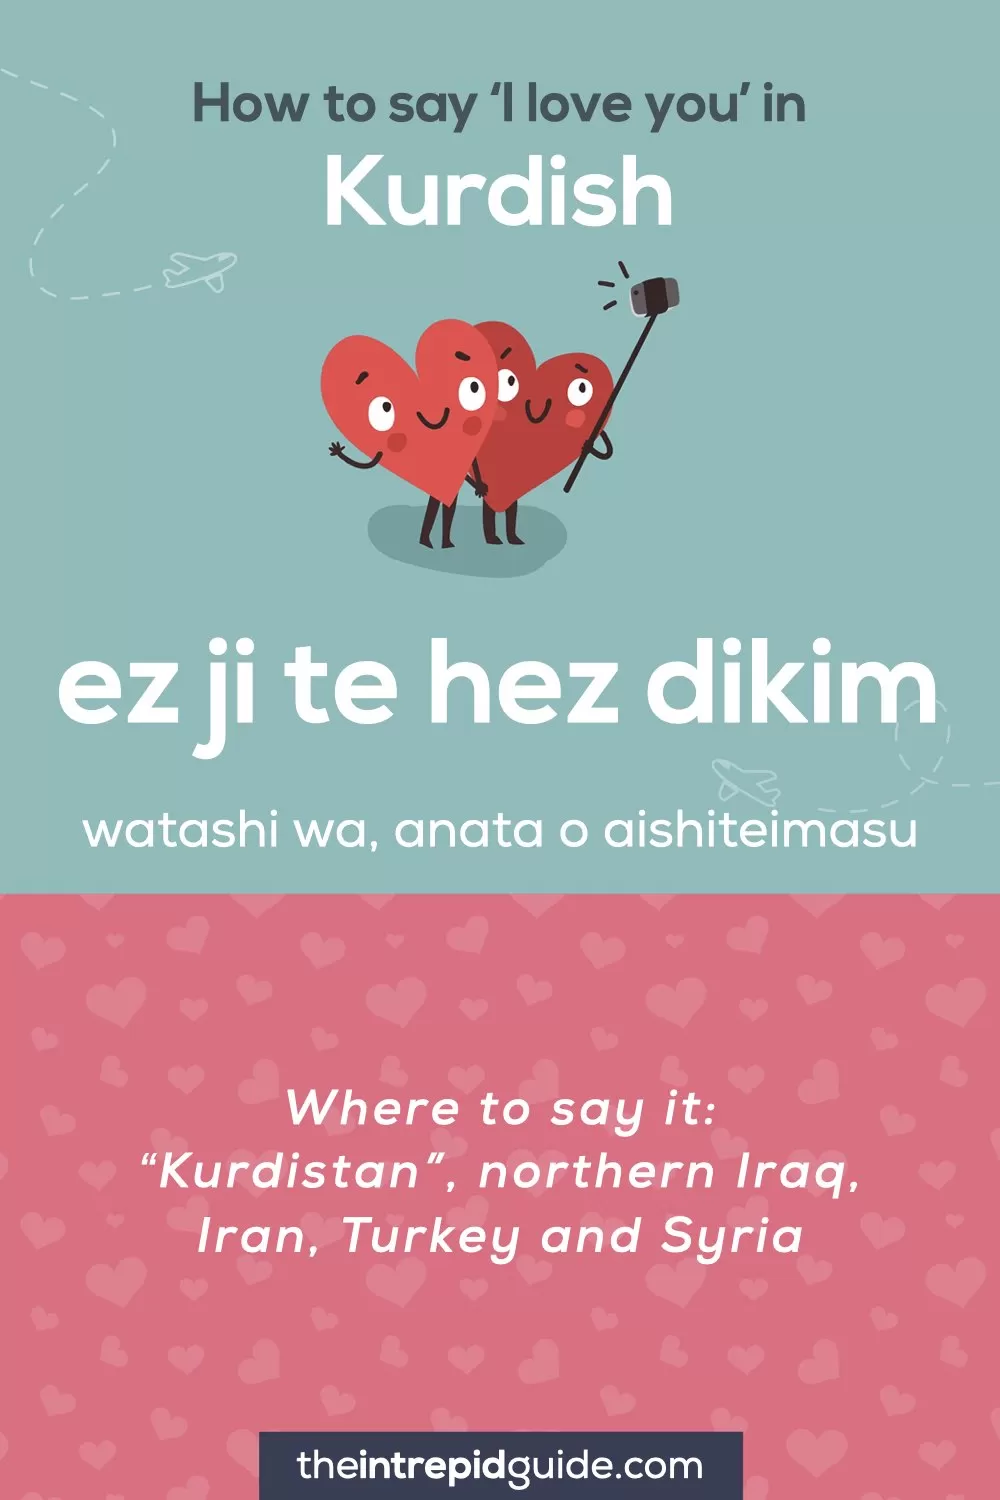 How to say I love you in different languages - Kurdish - ez ji te hez dikim